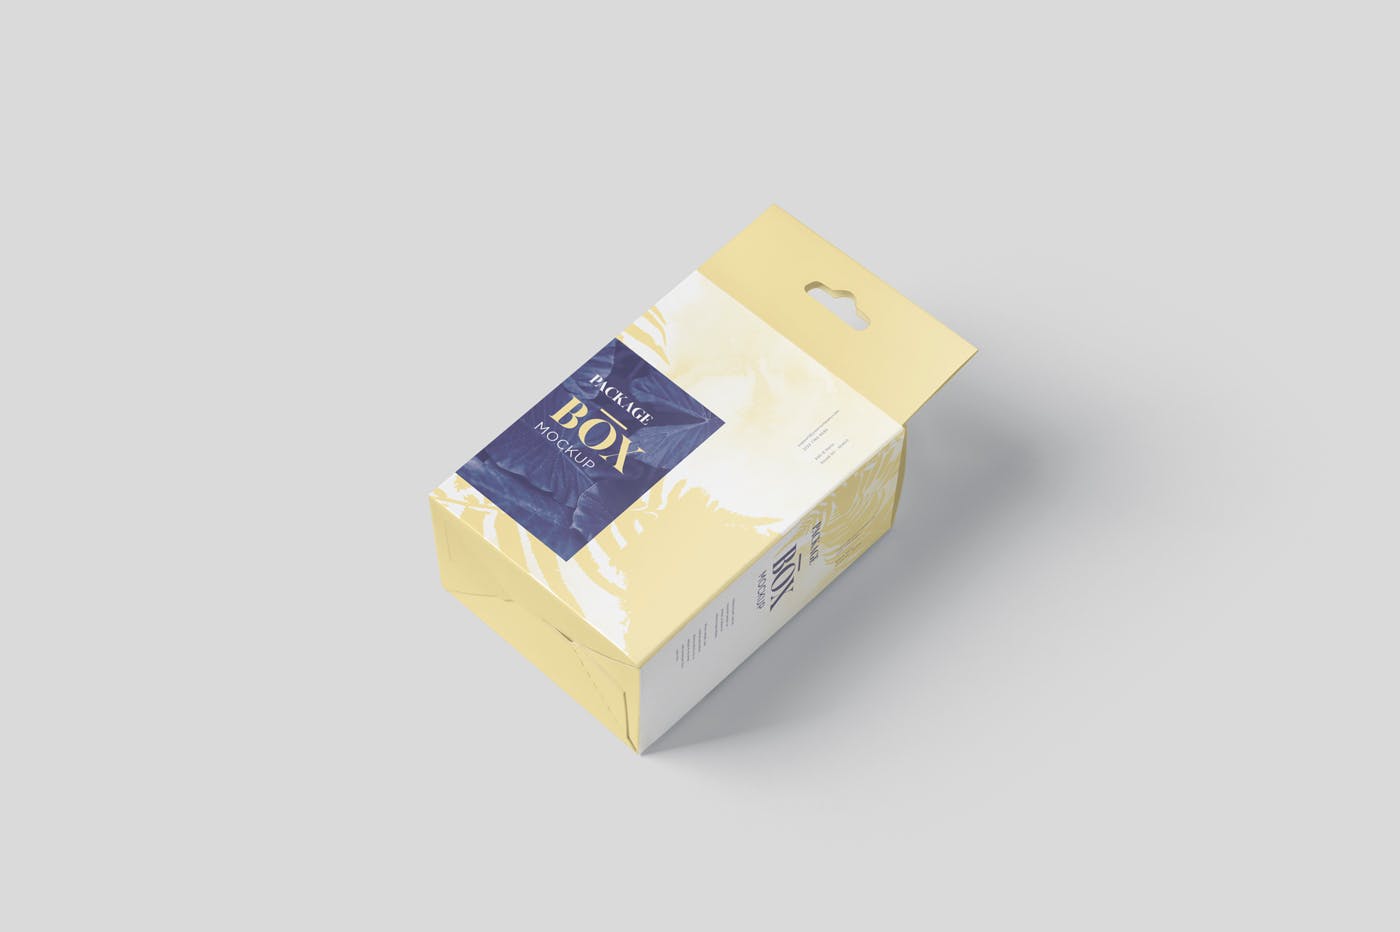 挂耳式扁平矩形包装盒非凡图库精选模板 Package Box Mockup Set – Slim Square with Hanger插图(5)